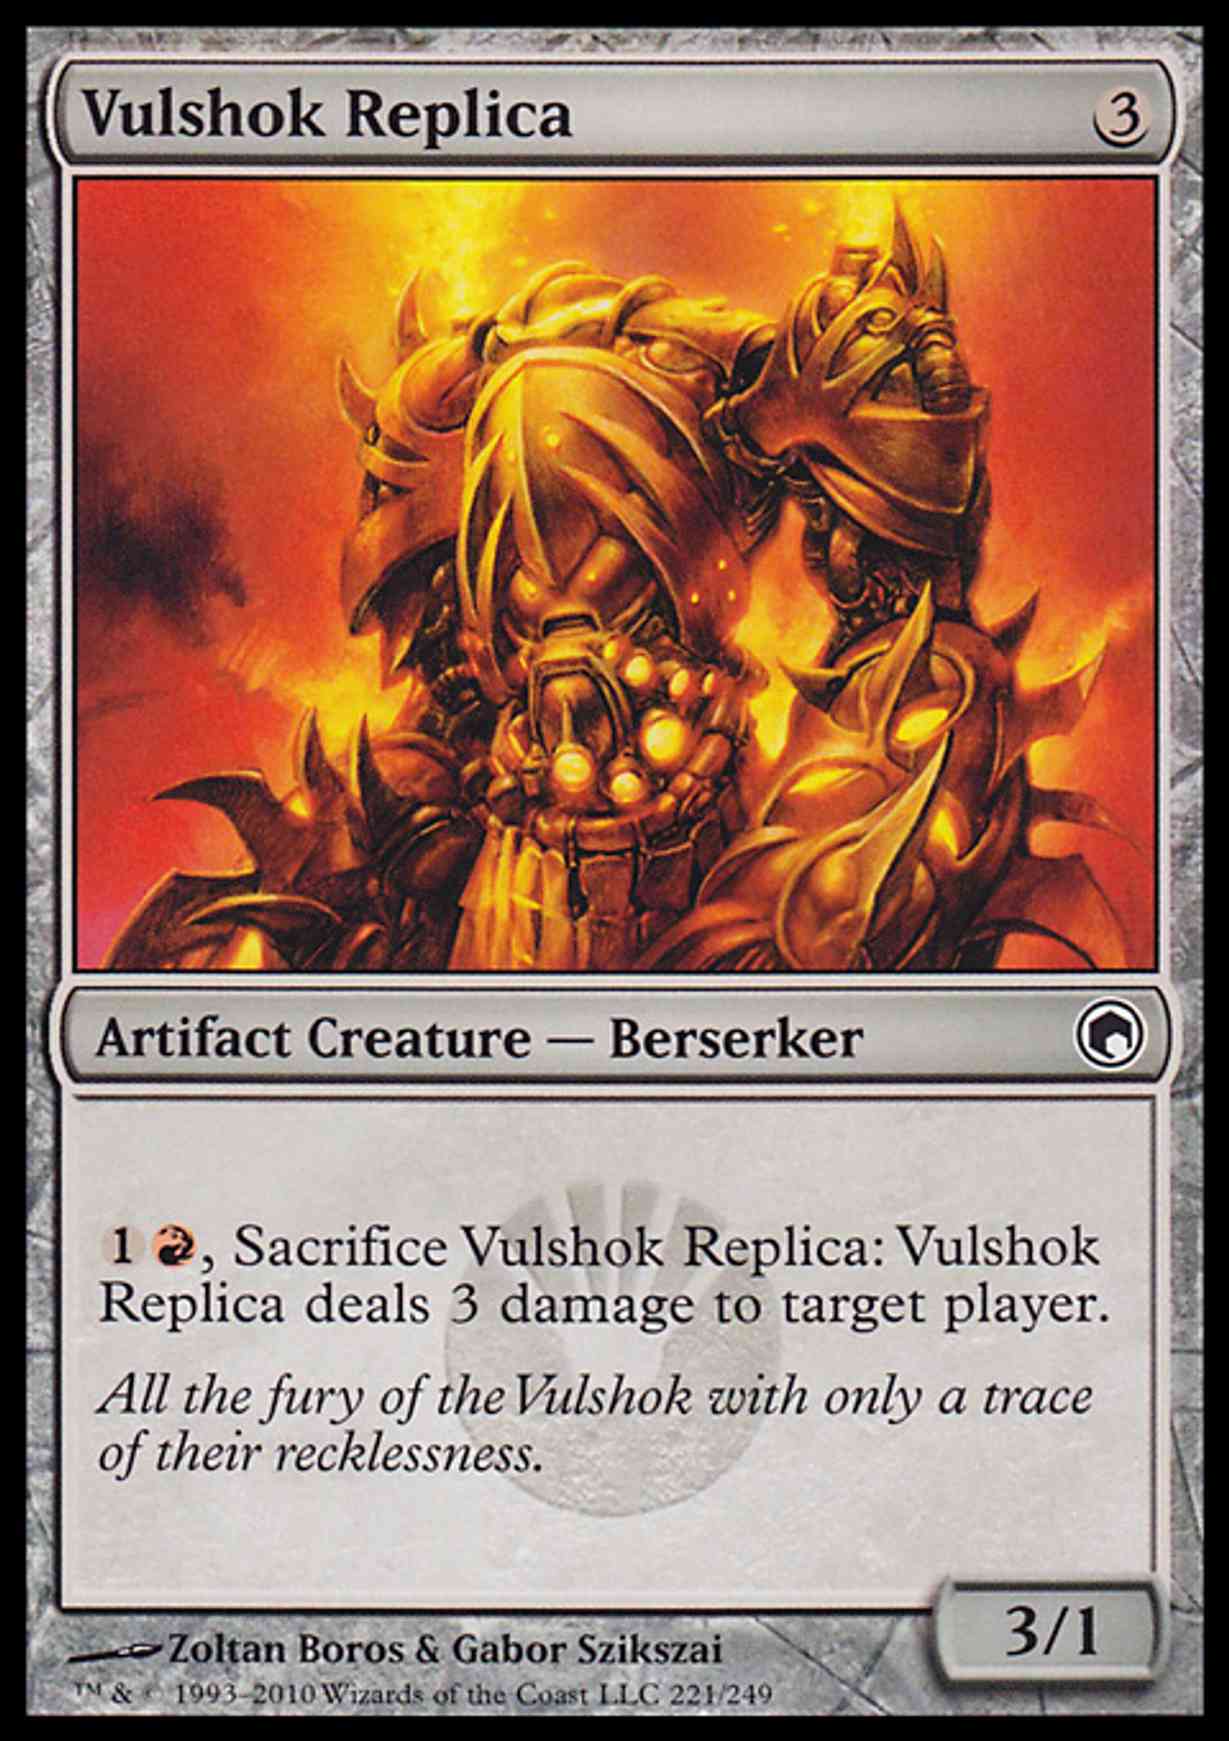 Vulshok Replica magic card front